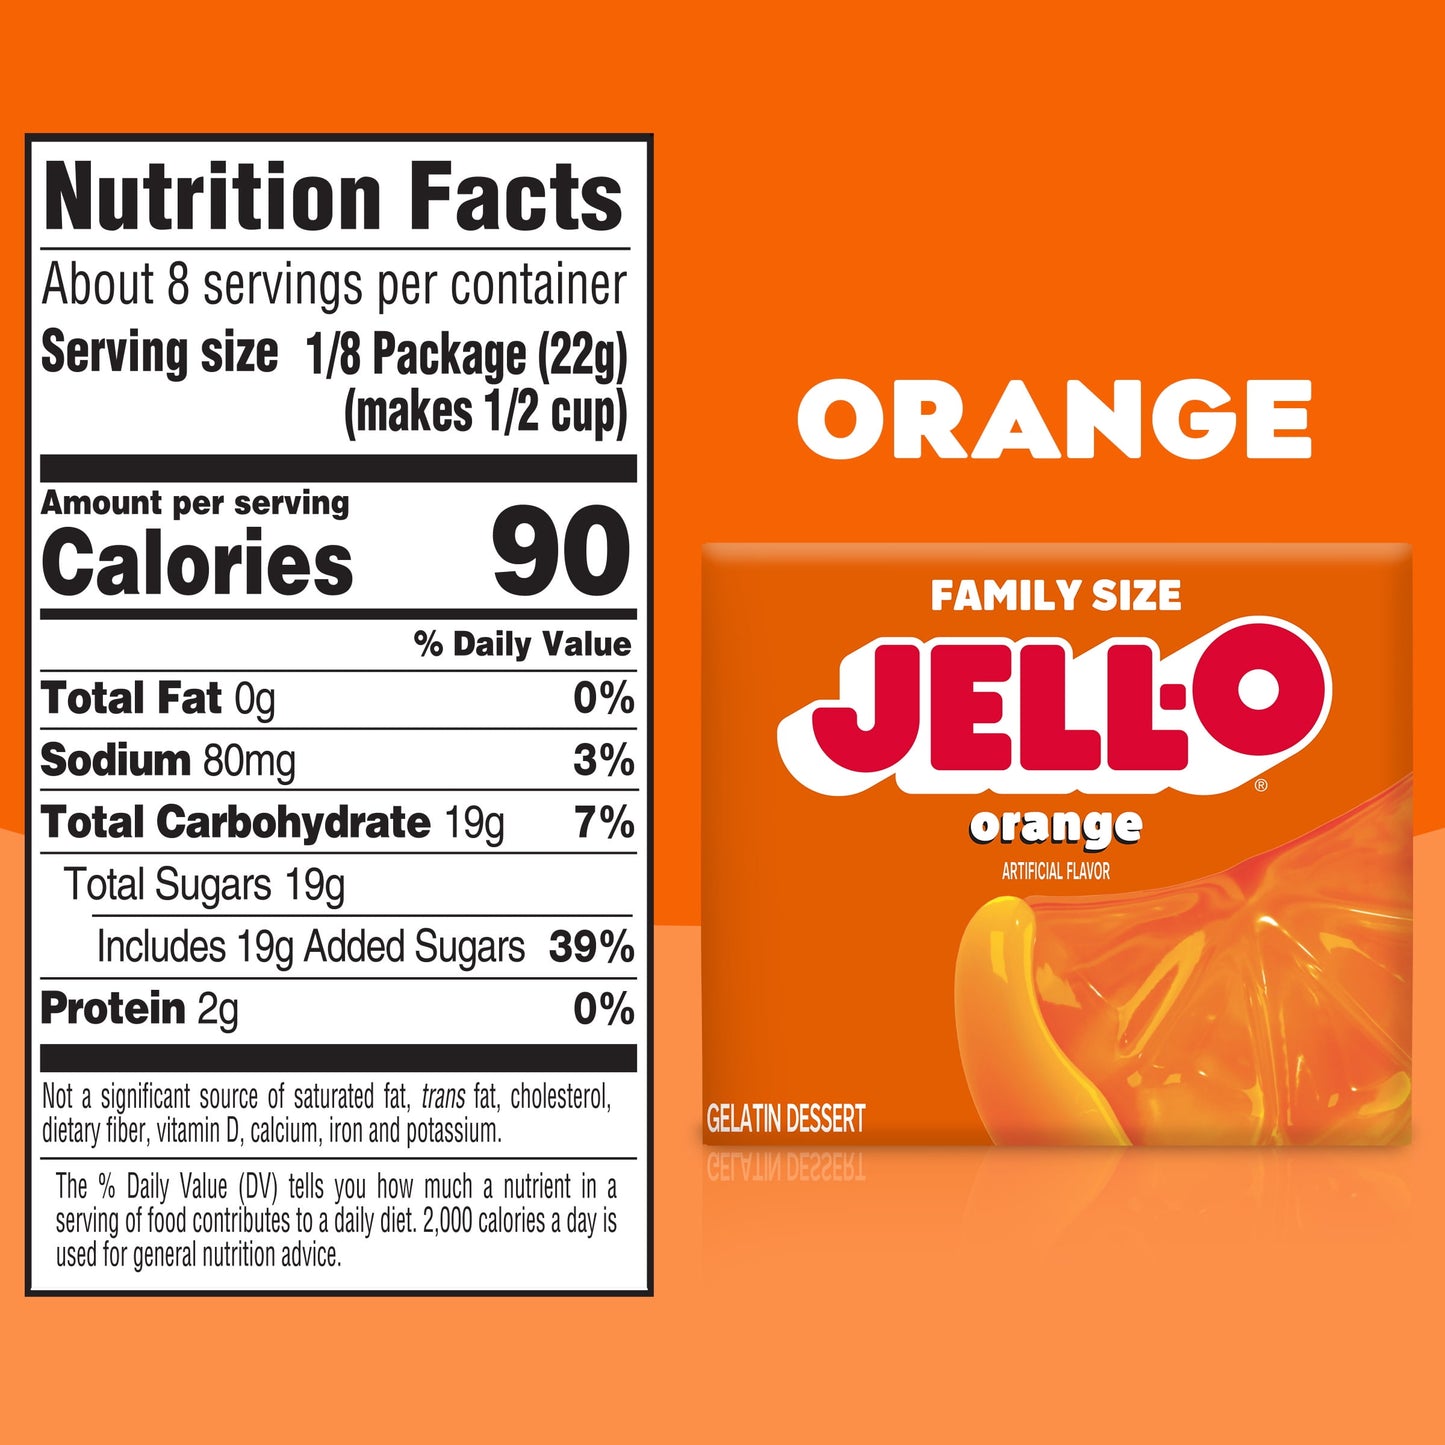 Jell-O Orange Artificially Flavored Gelatin Dessert Mix, Family Size, 6 oz Box